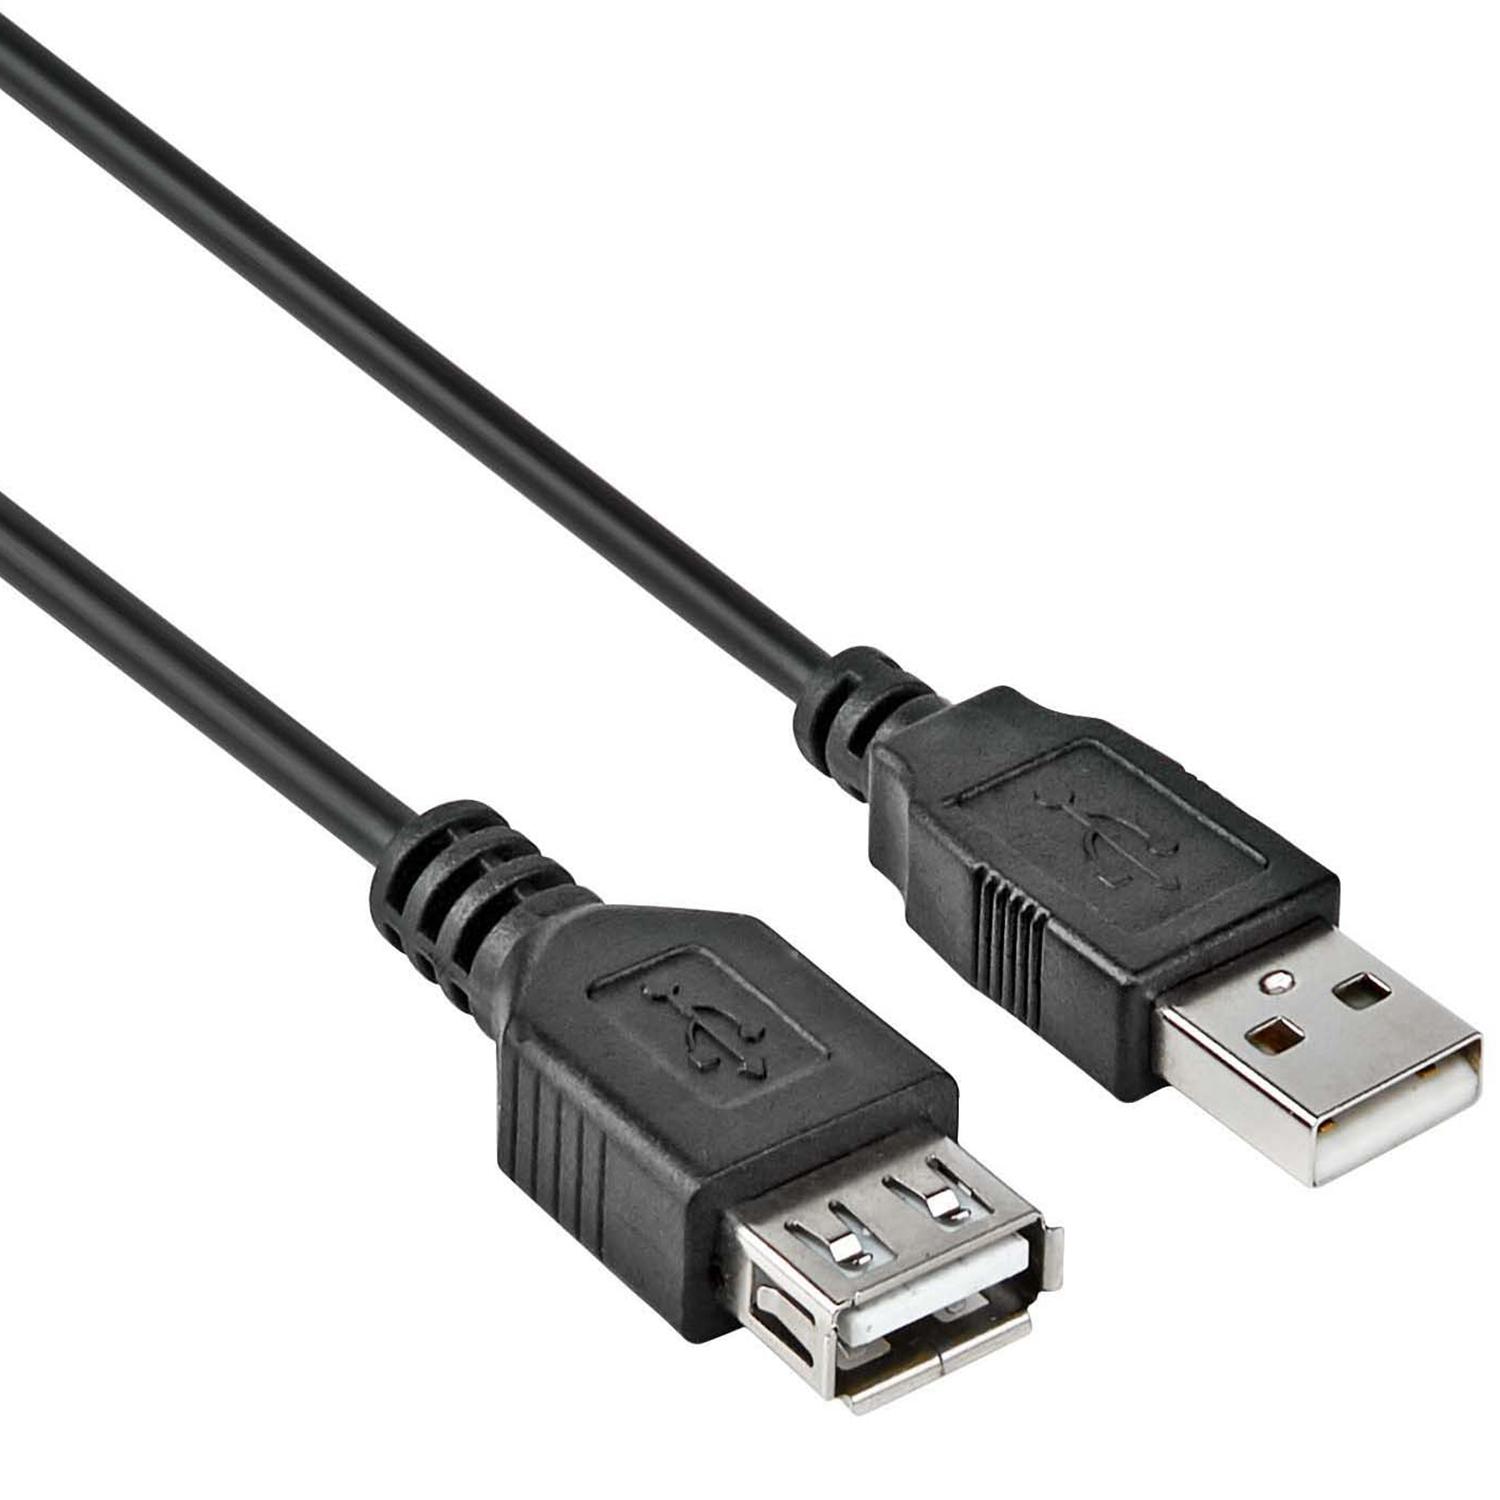 USB 2.0 kabel - Allteq